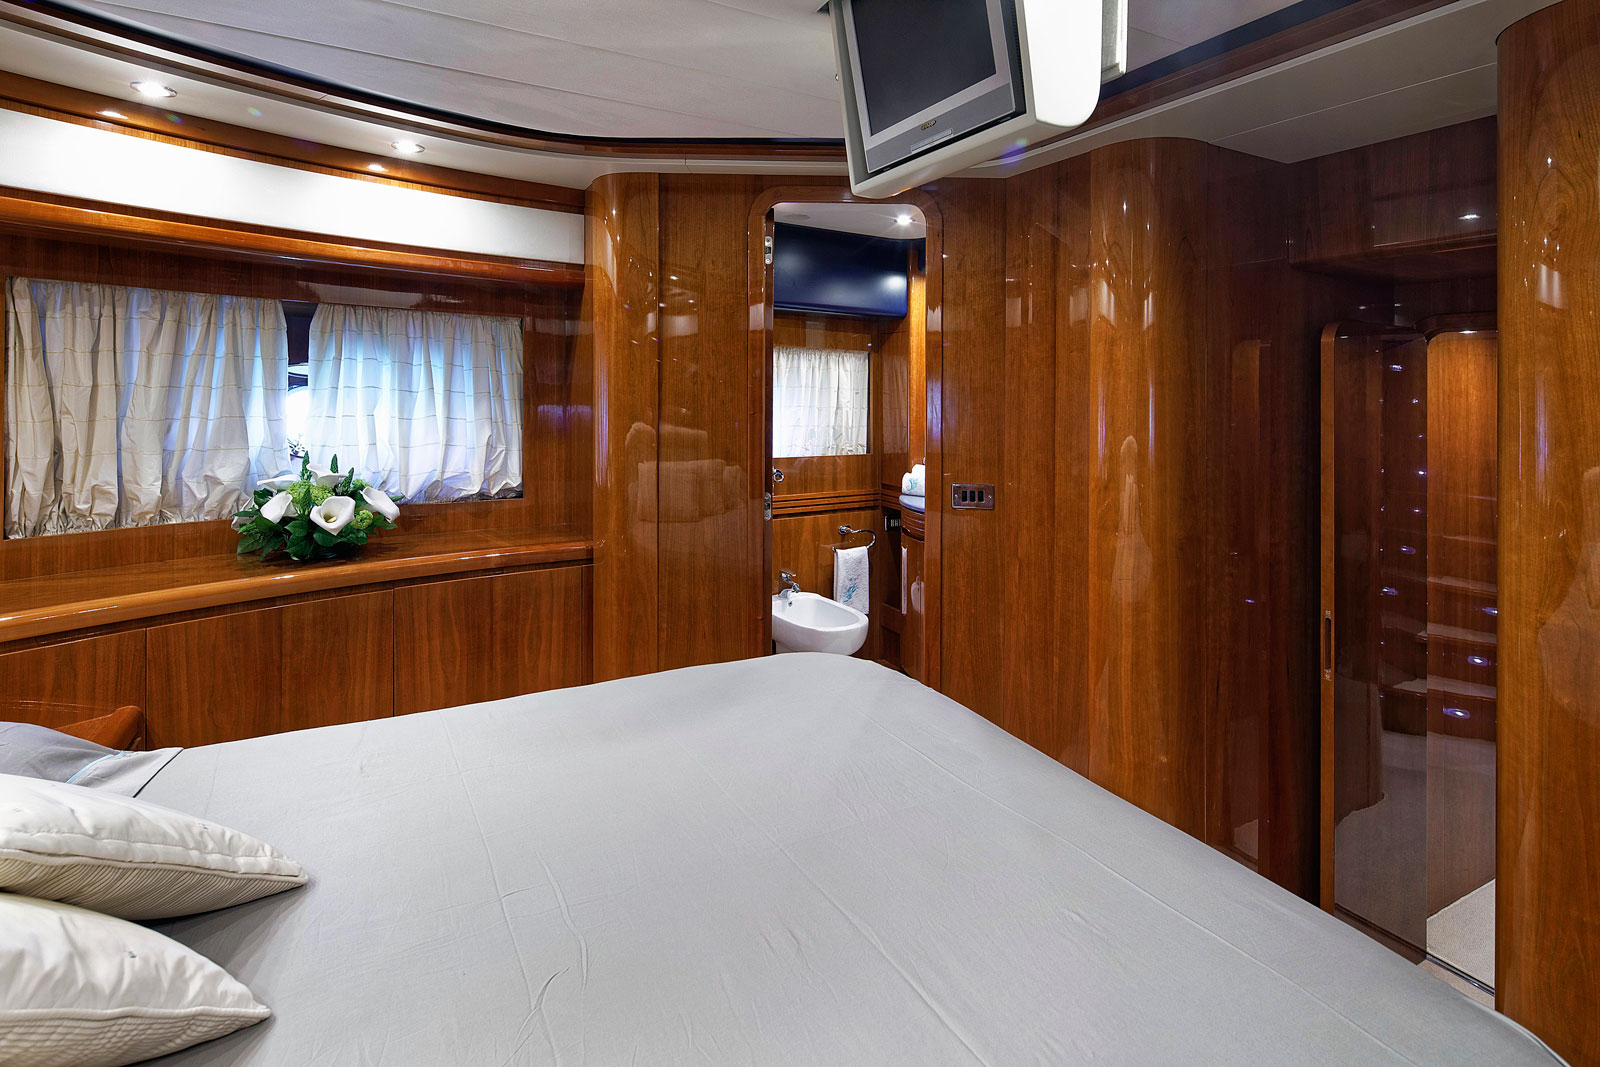 Motor Yacht AQVA - VIP cabin image 2